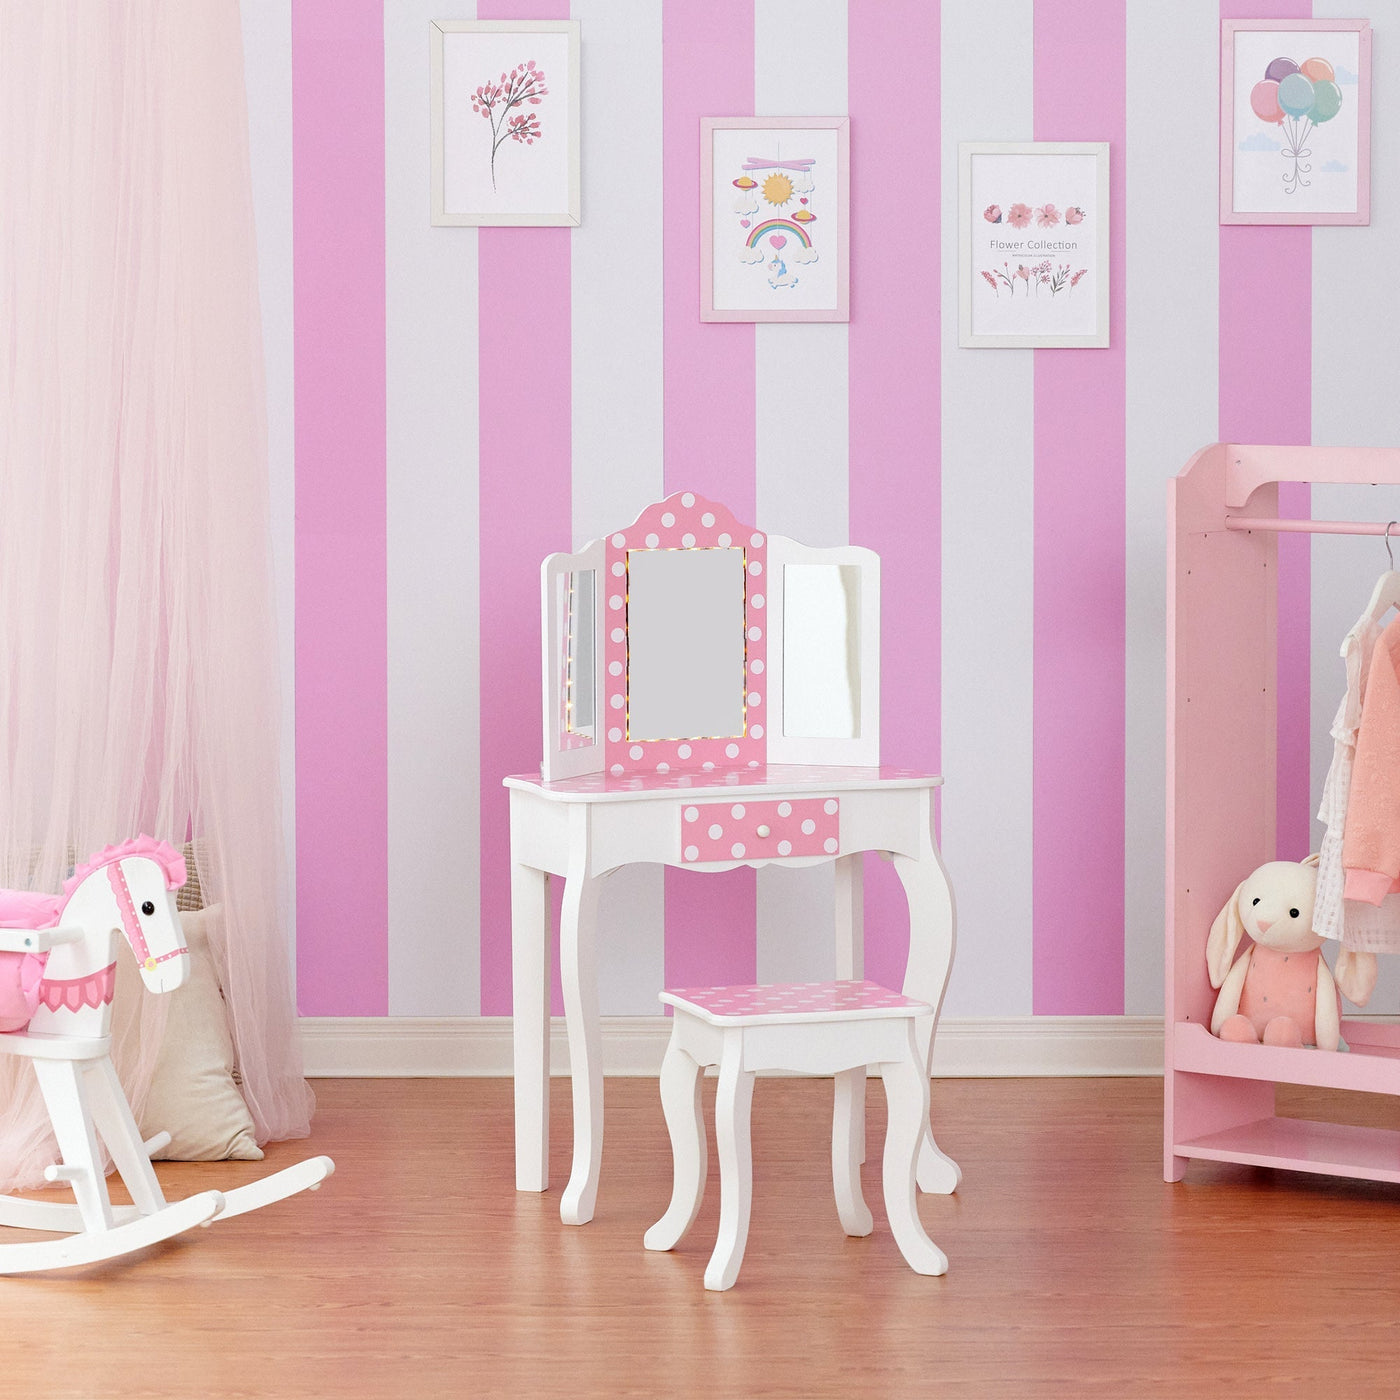 Fantasy Fields Gisele Polka Dot Prints Play Vanity Set with LED Mirror Light, Pink/White